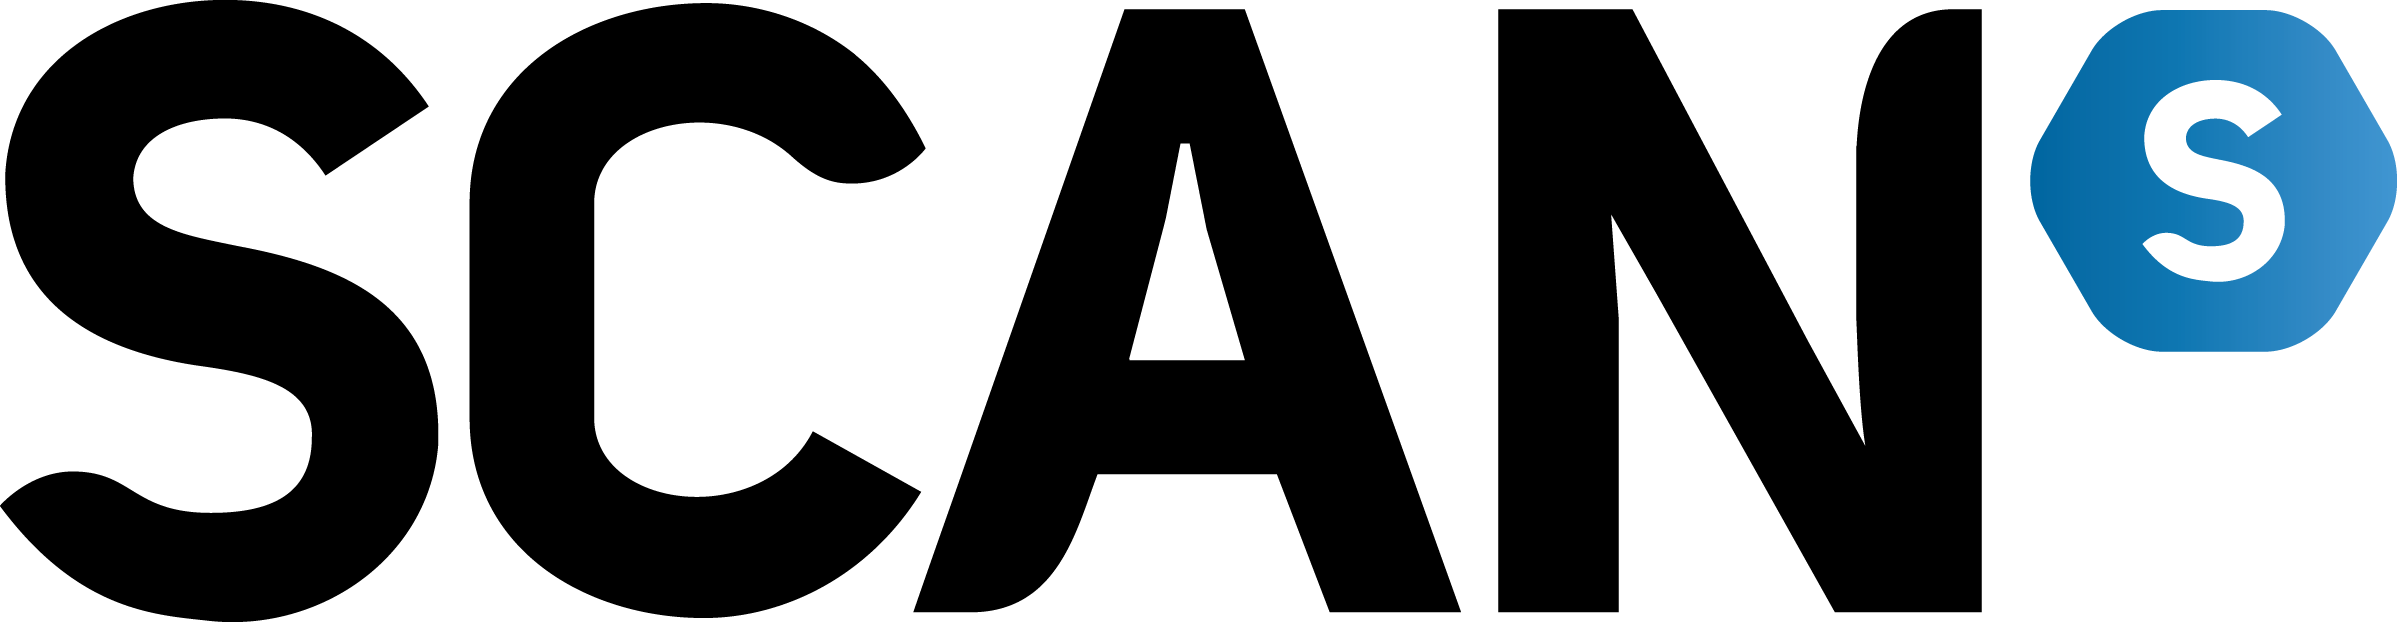 SCAN_Logo_Blk